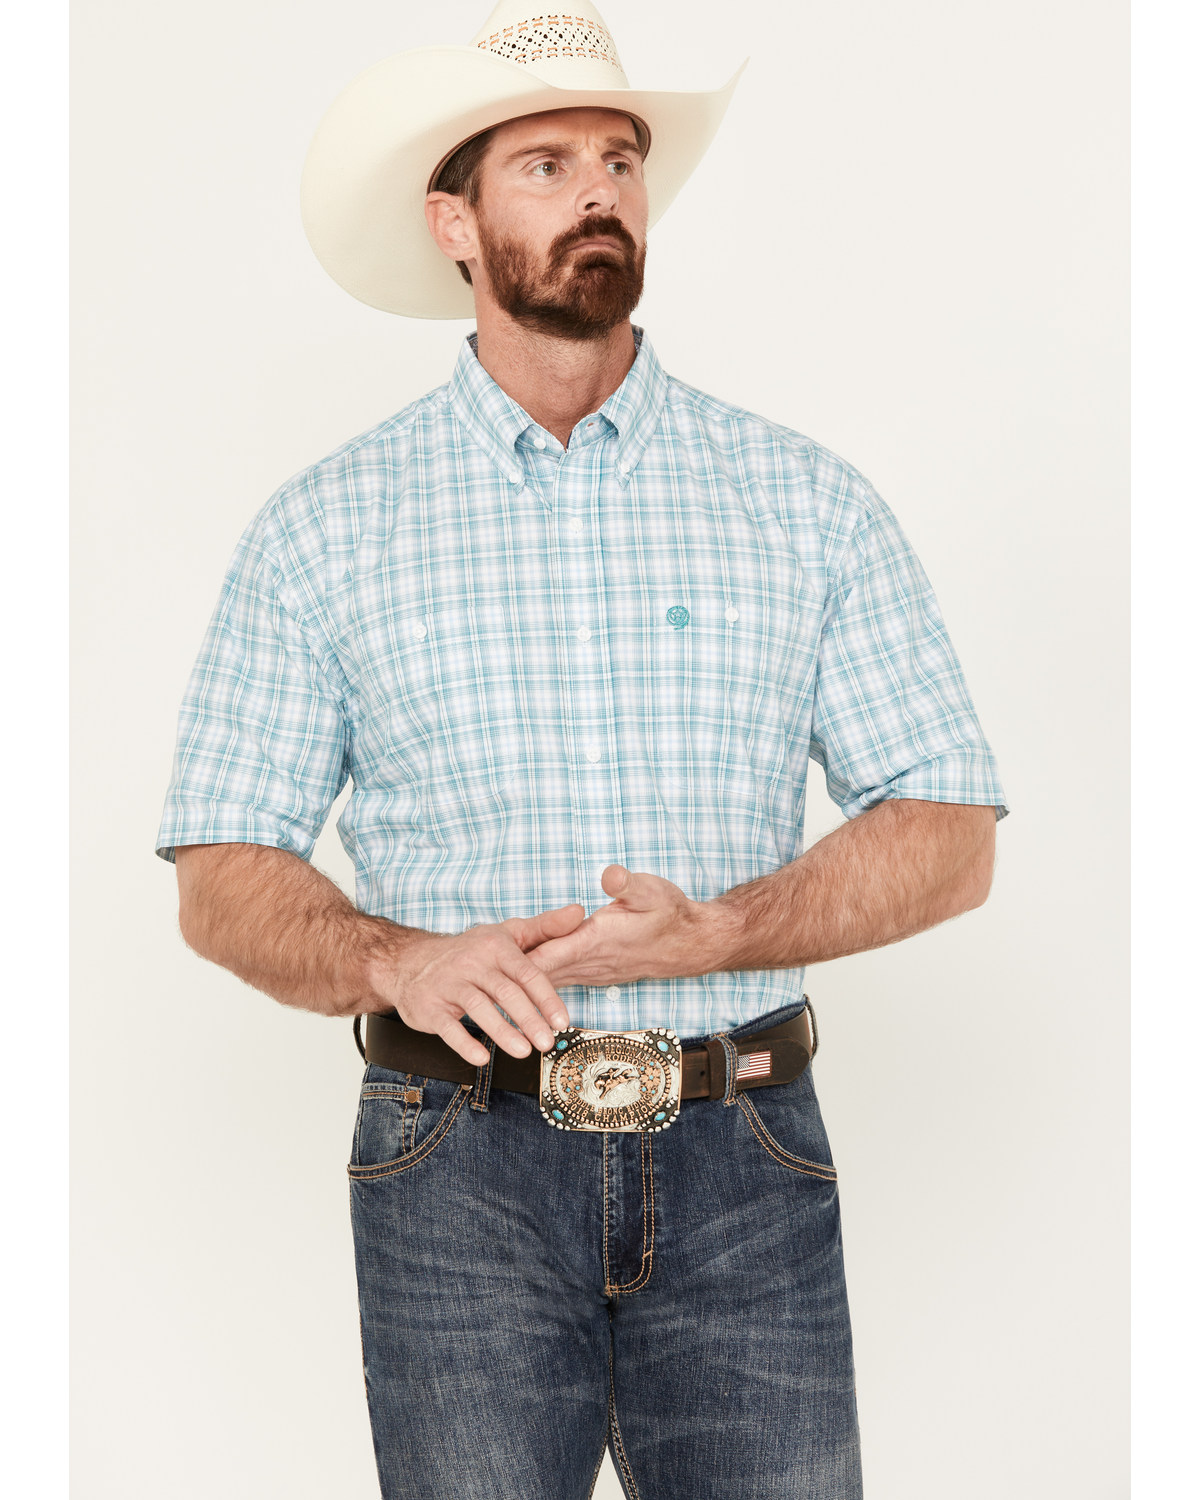 George Strait by Wrangler Men's Plaid Print Short Sleeve Button-Down Western Shirt